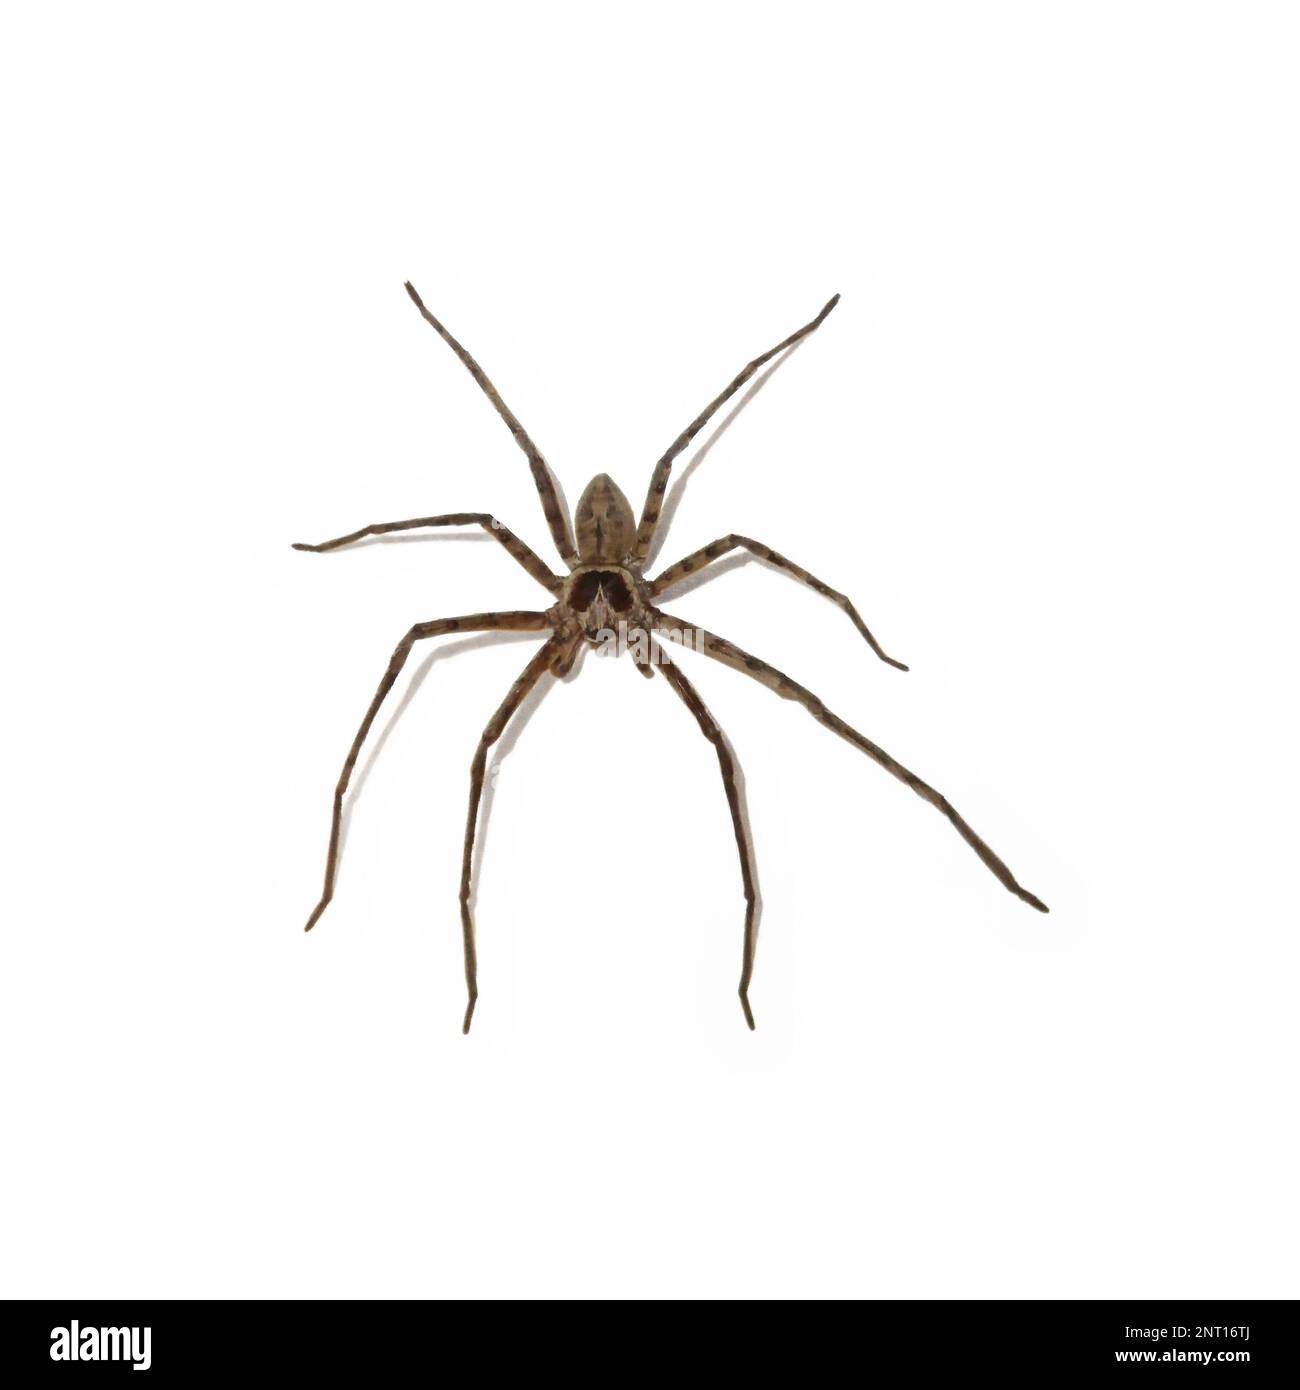 Heteropoda venatoria is a species of spider in the family Sparassidae, the huntsman spiders. Stock Photo